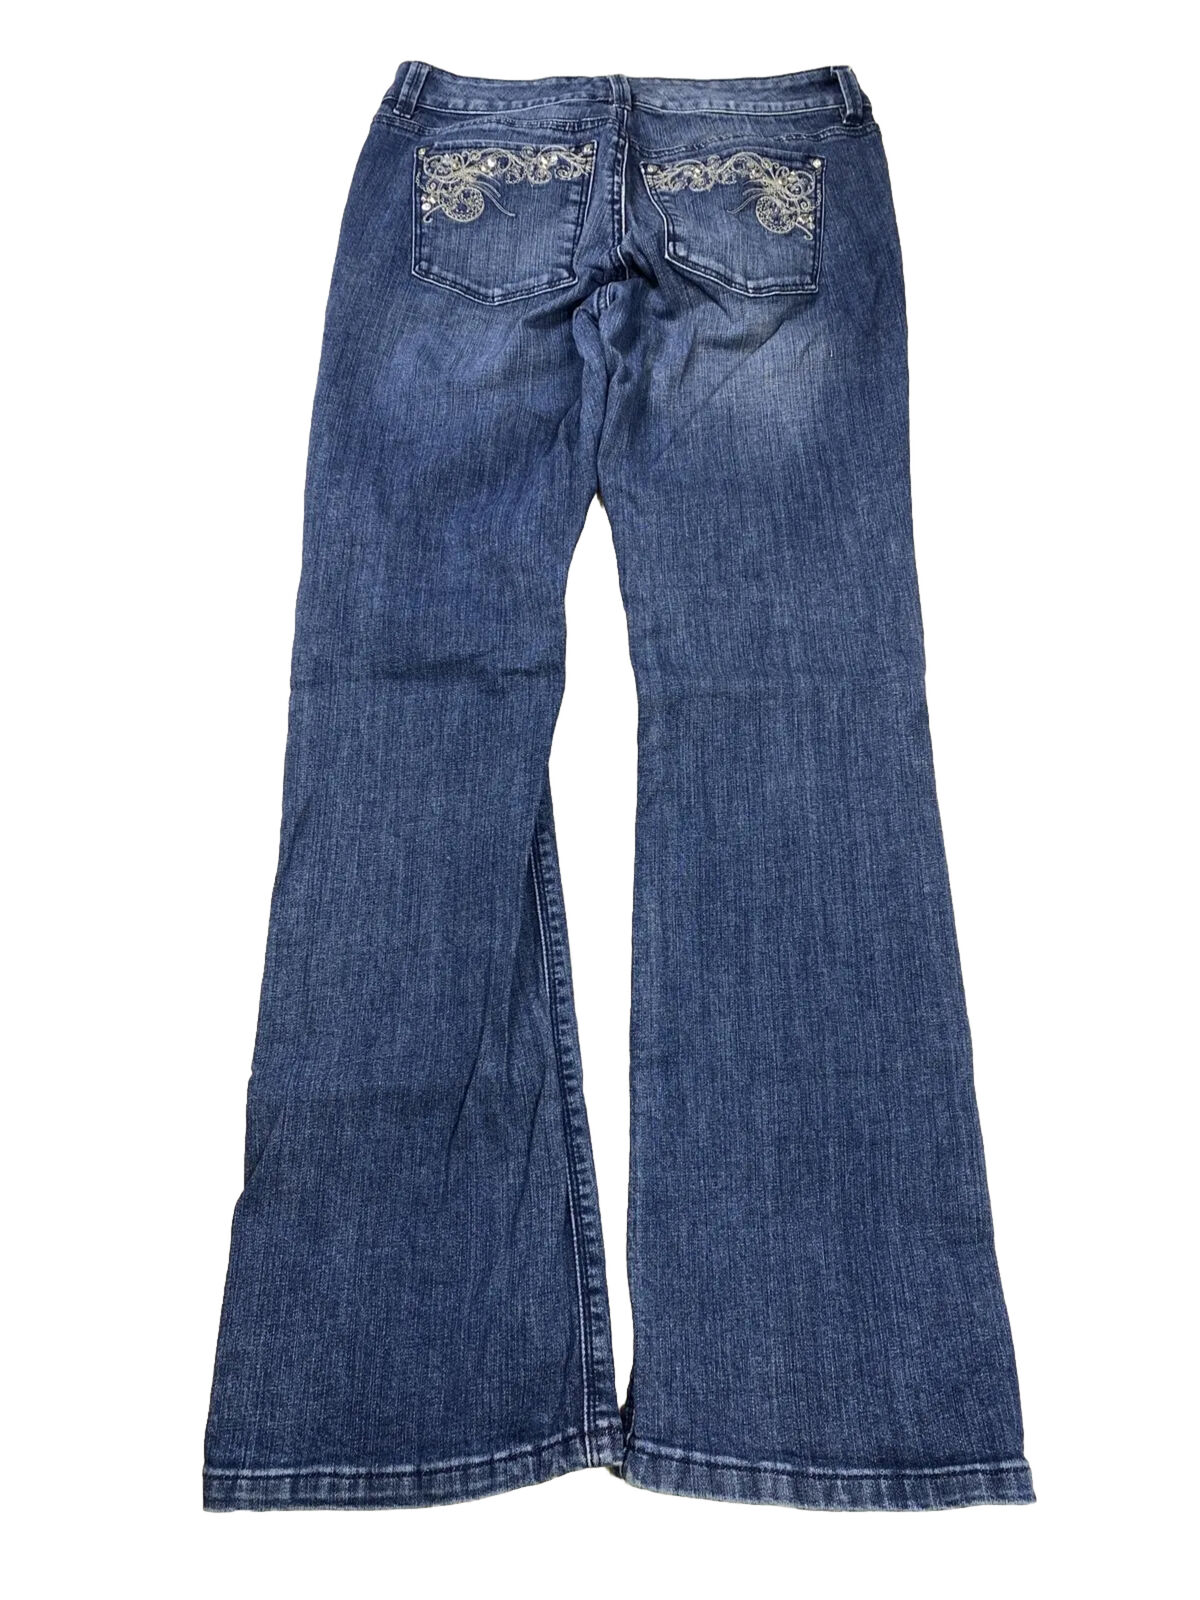 White House Black Market Women's Medium Wash Boot Cut Jeans - 2 Short